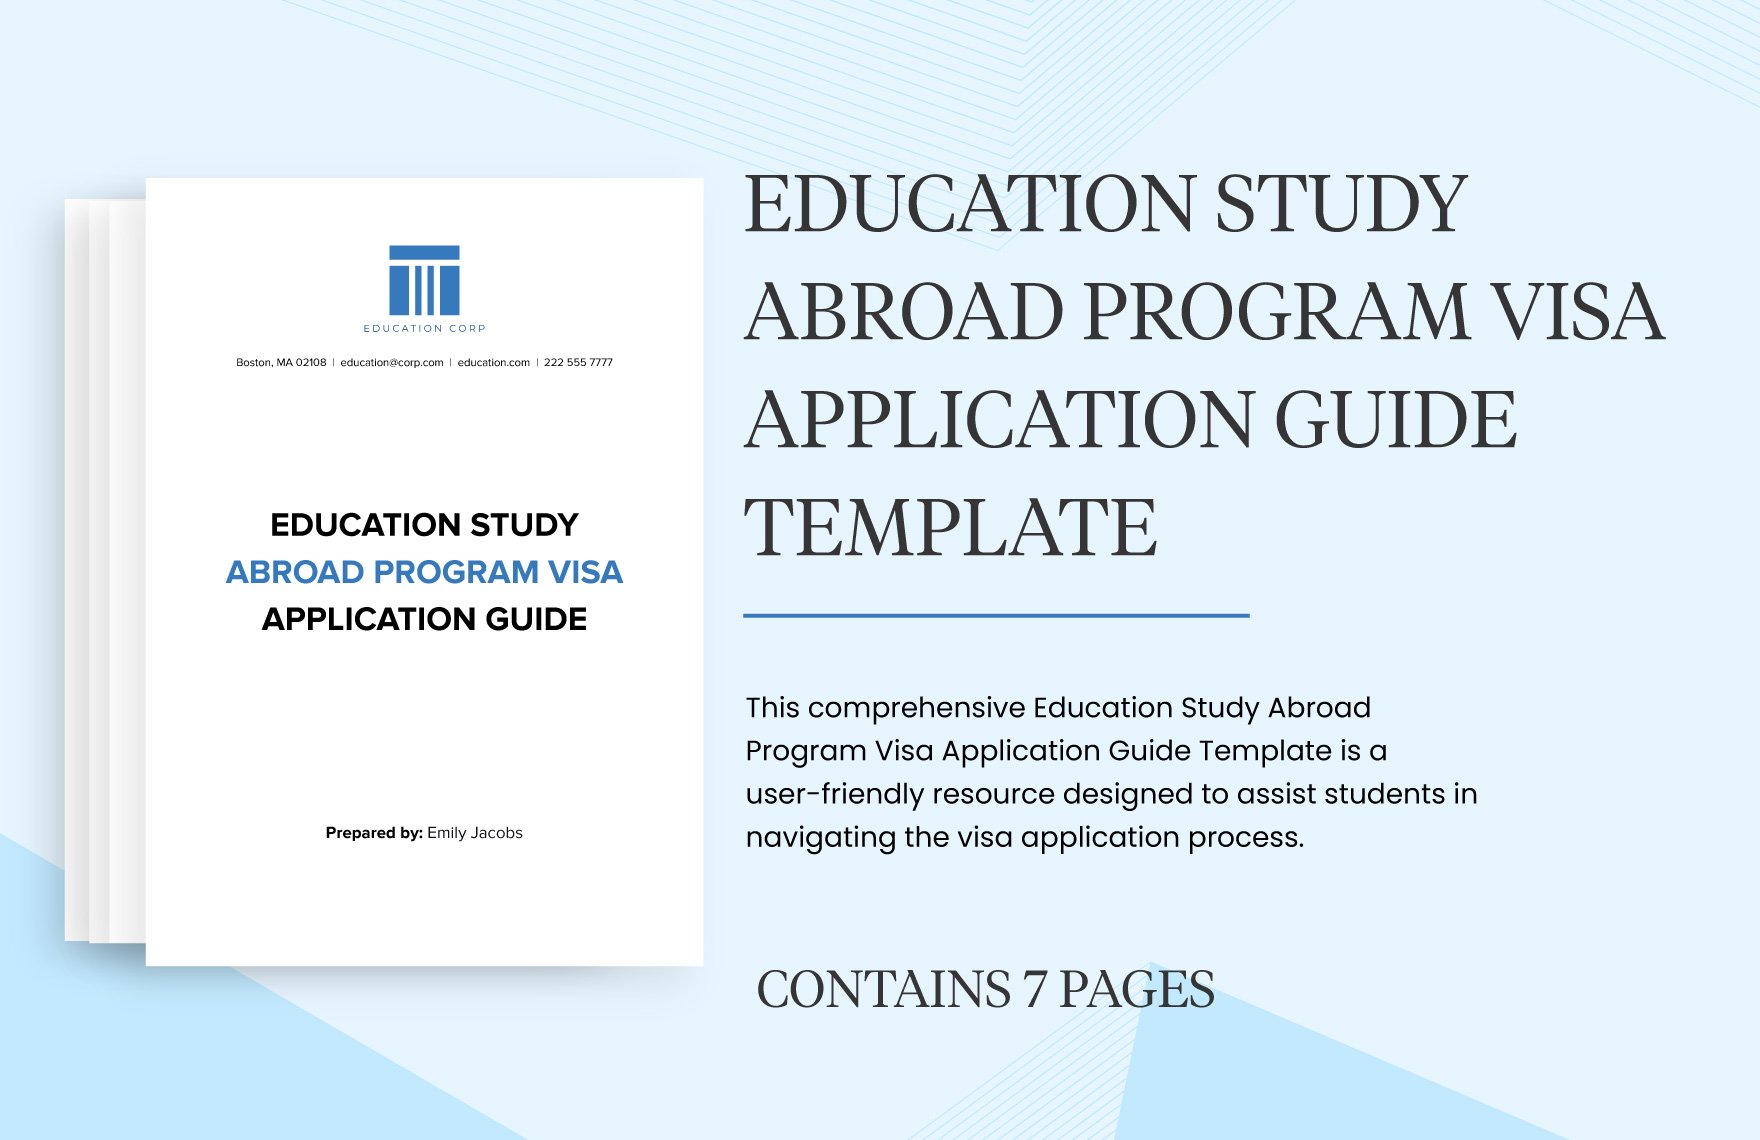 Education Study Abroad Program Visa Application Guide Template